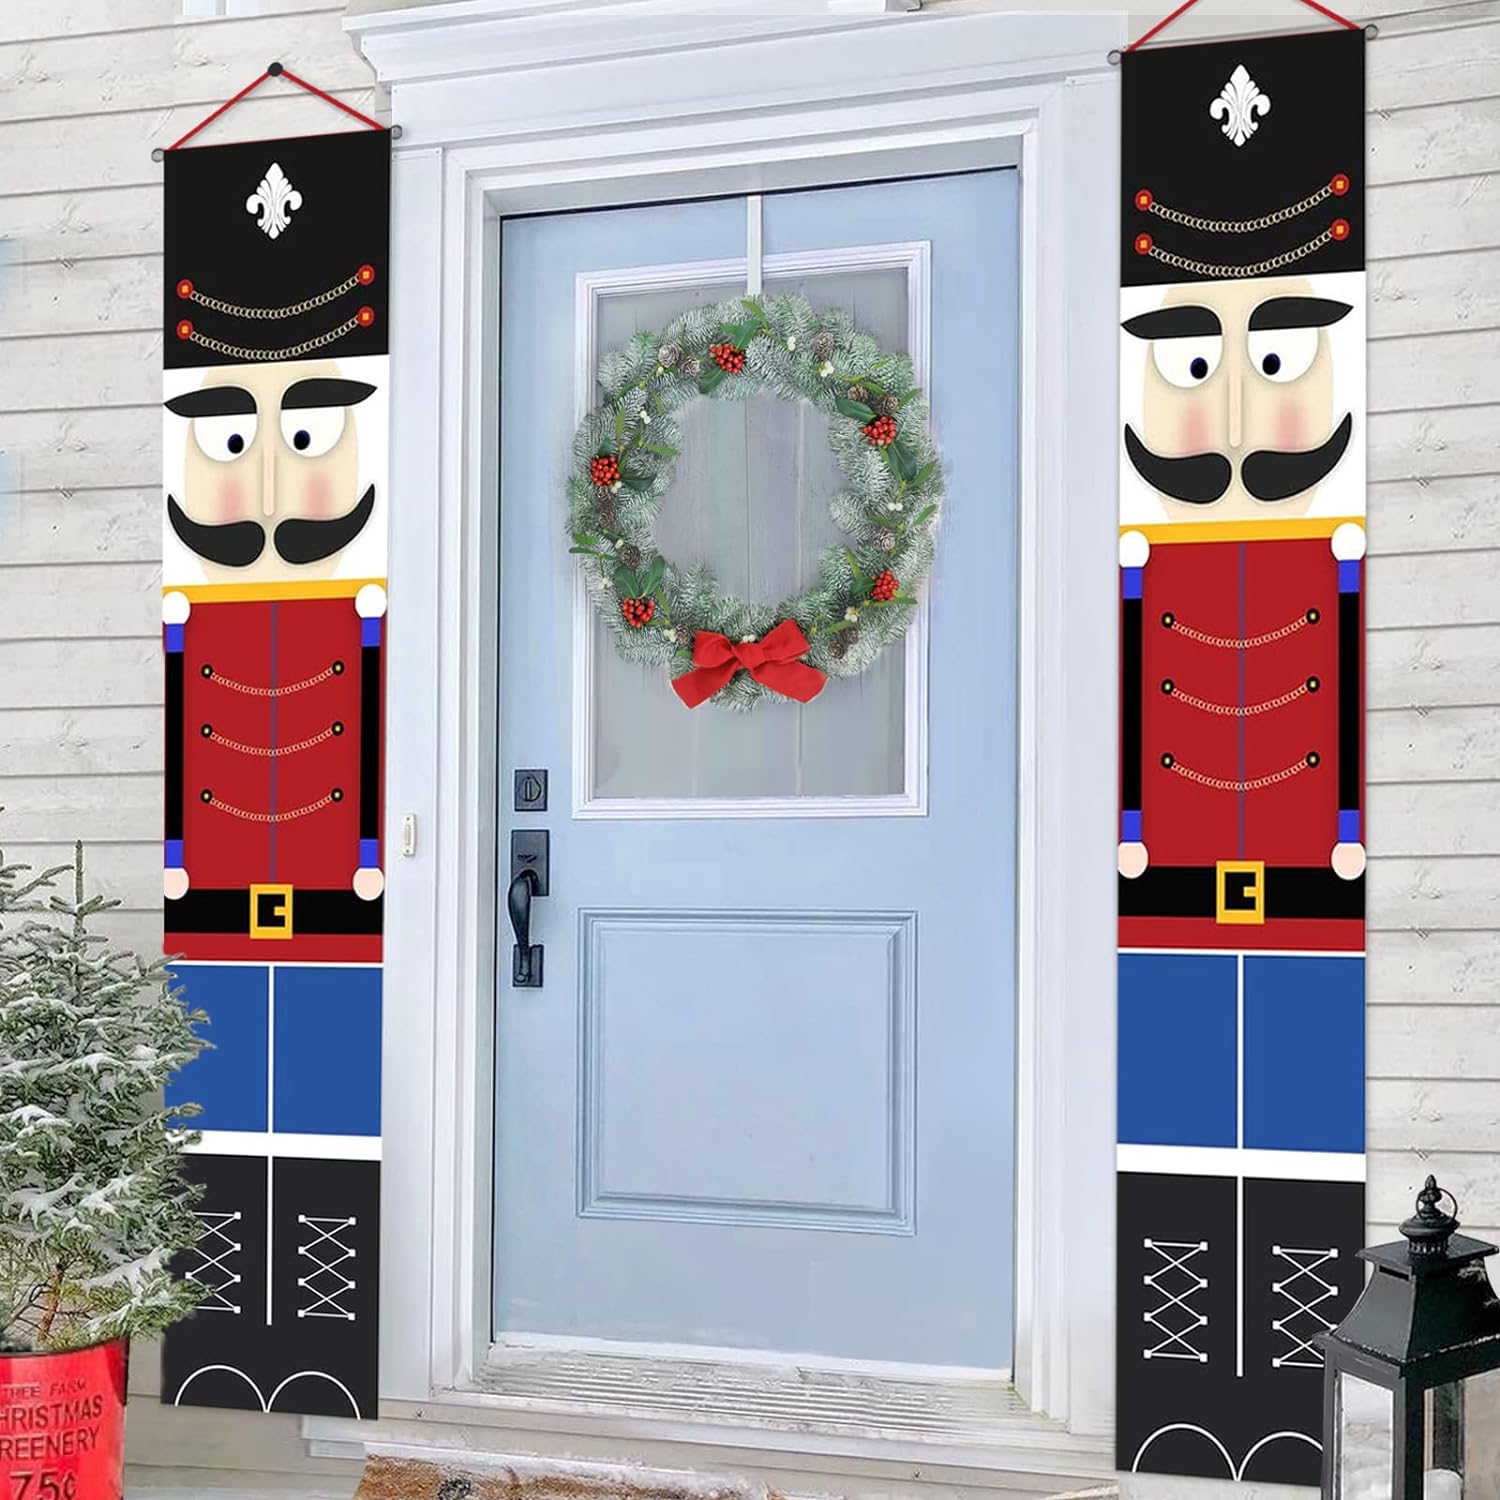 Nutcracker Christmas Decorations - Outdoor Xmas Decor - Life Size Soldier Model Nutcracker Banners for Front Door Porch